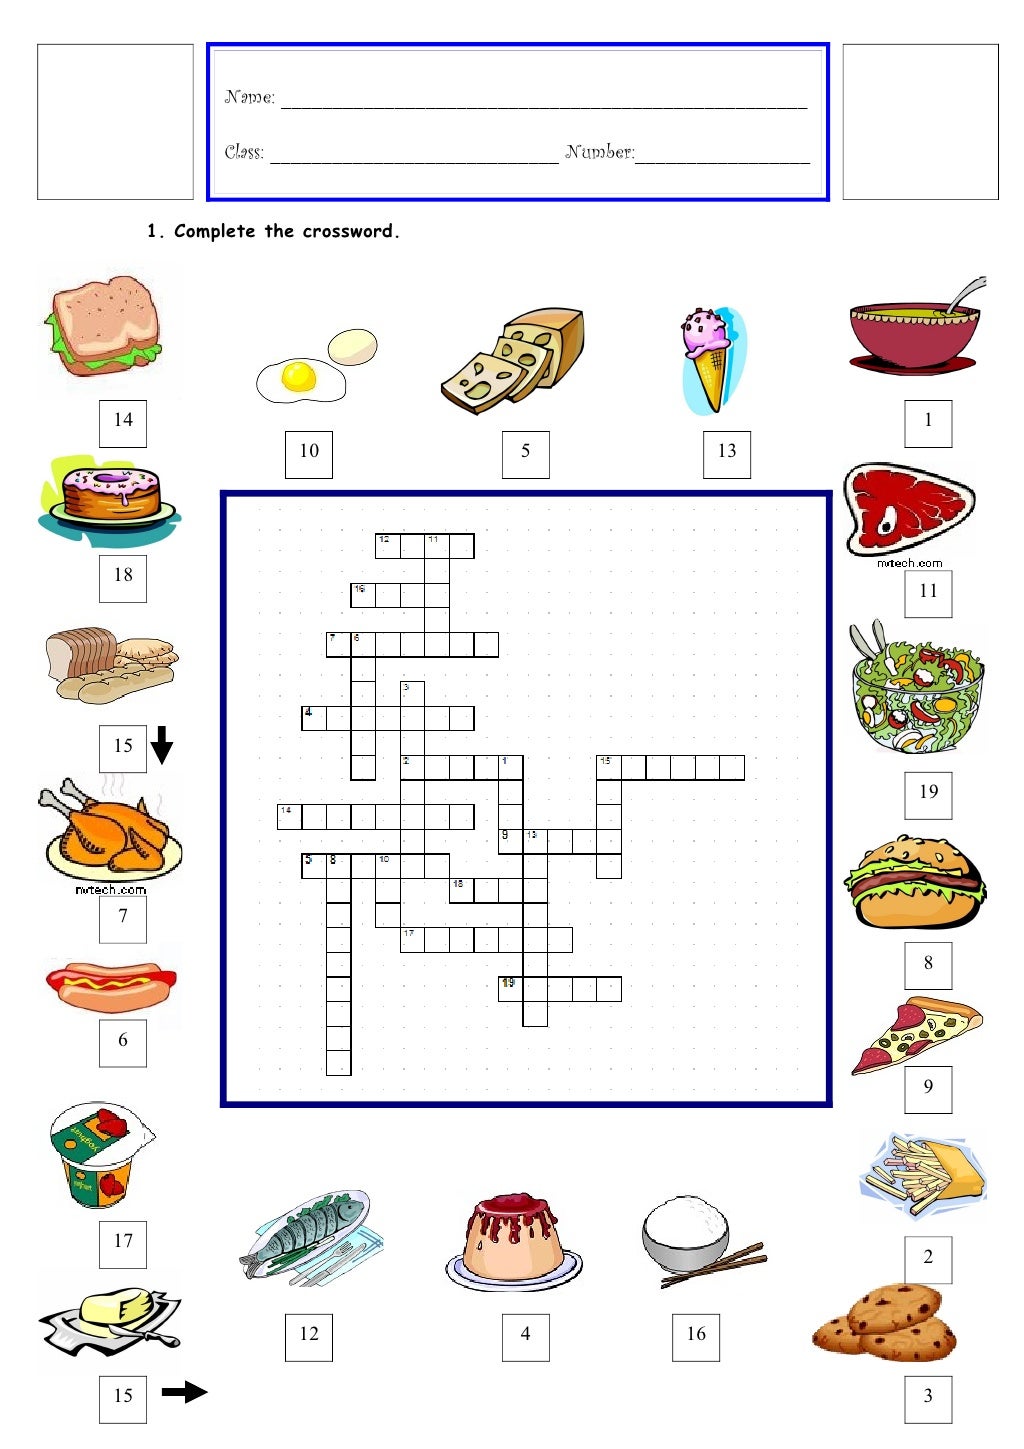 the art of food presentation crossword clue